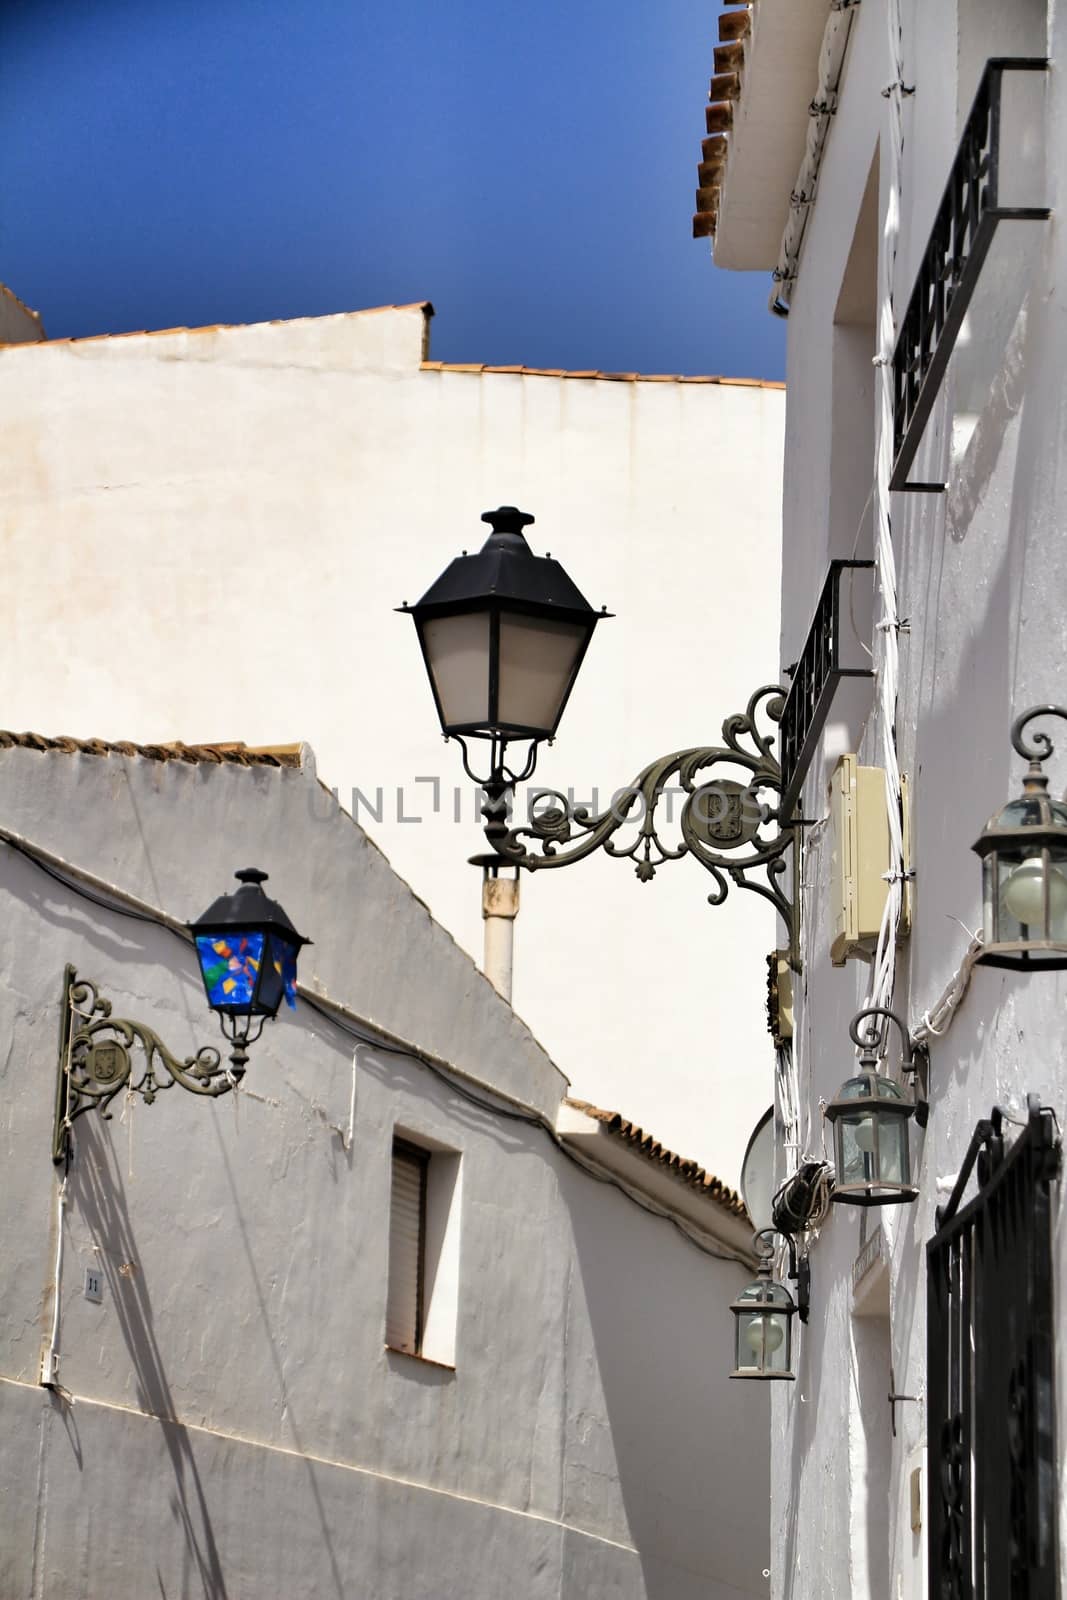 Narrow streets and beautiful white facades in Altea, Alicante, Spain